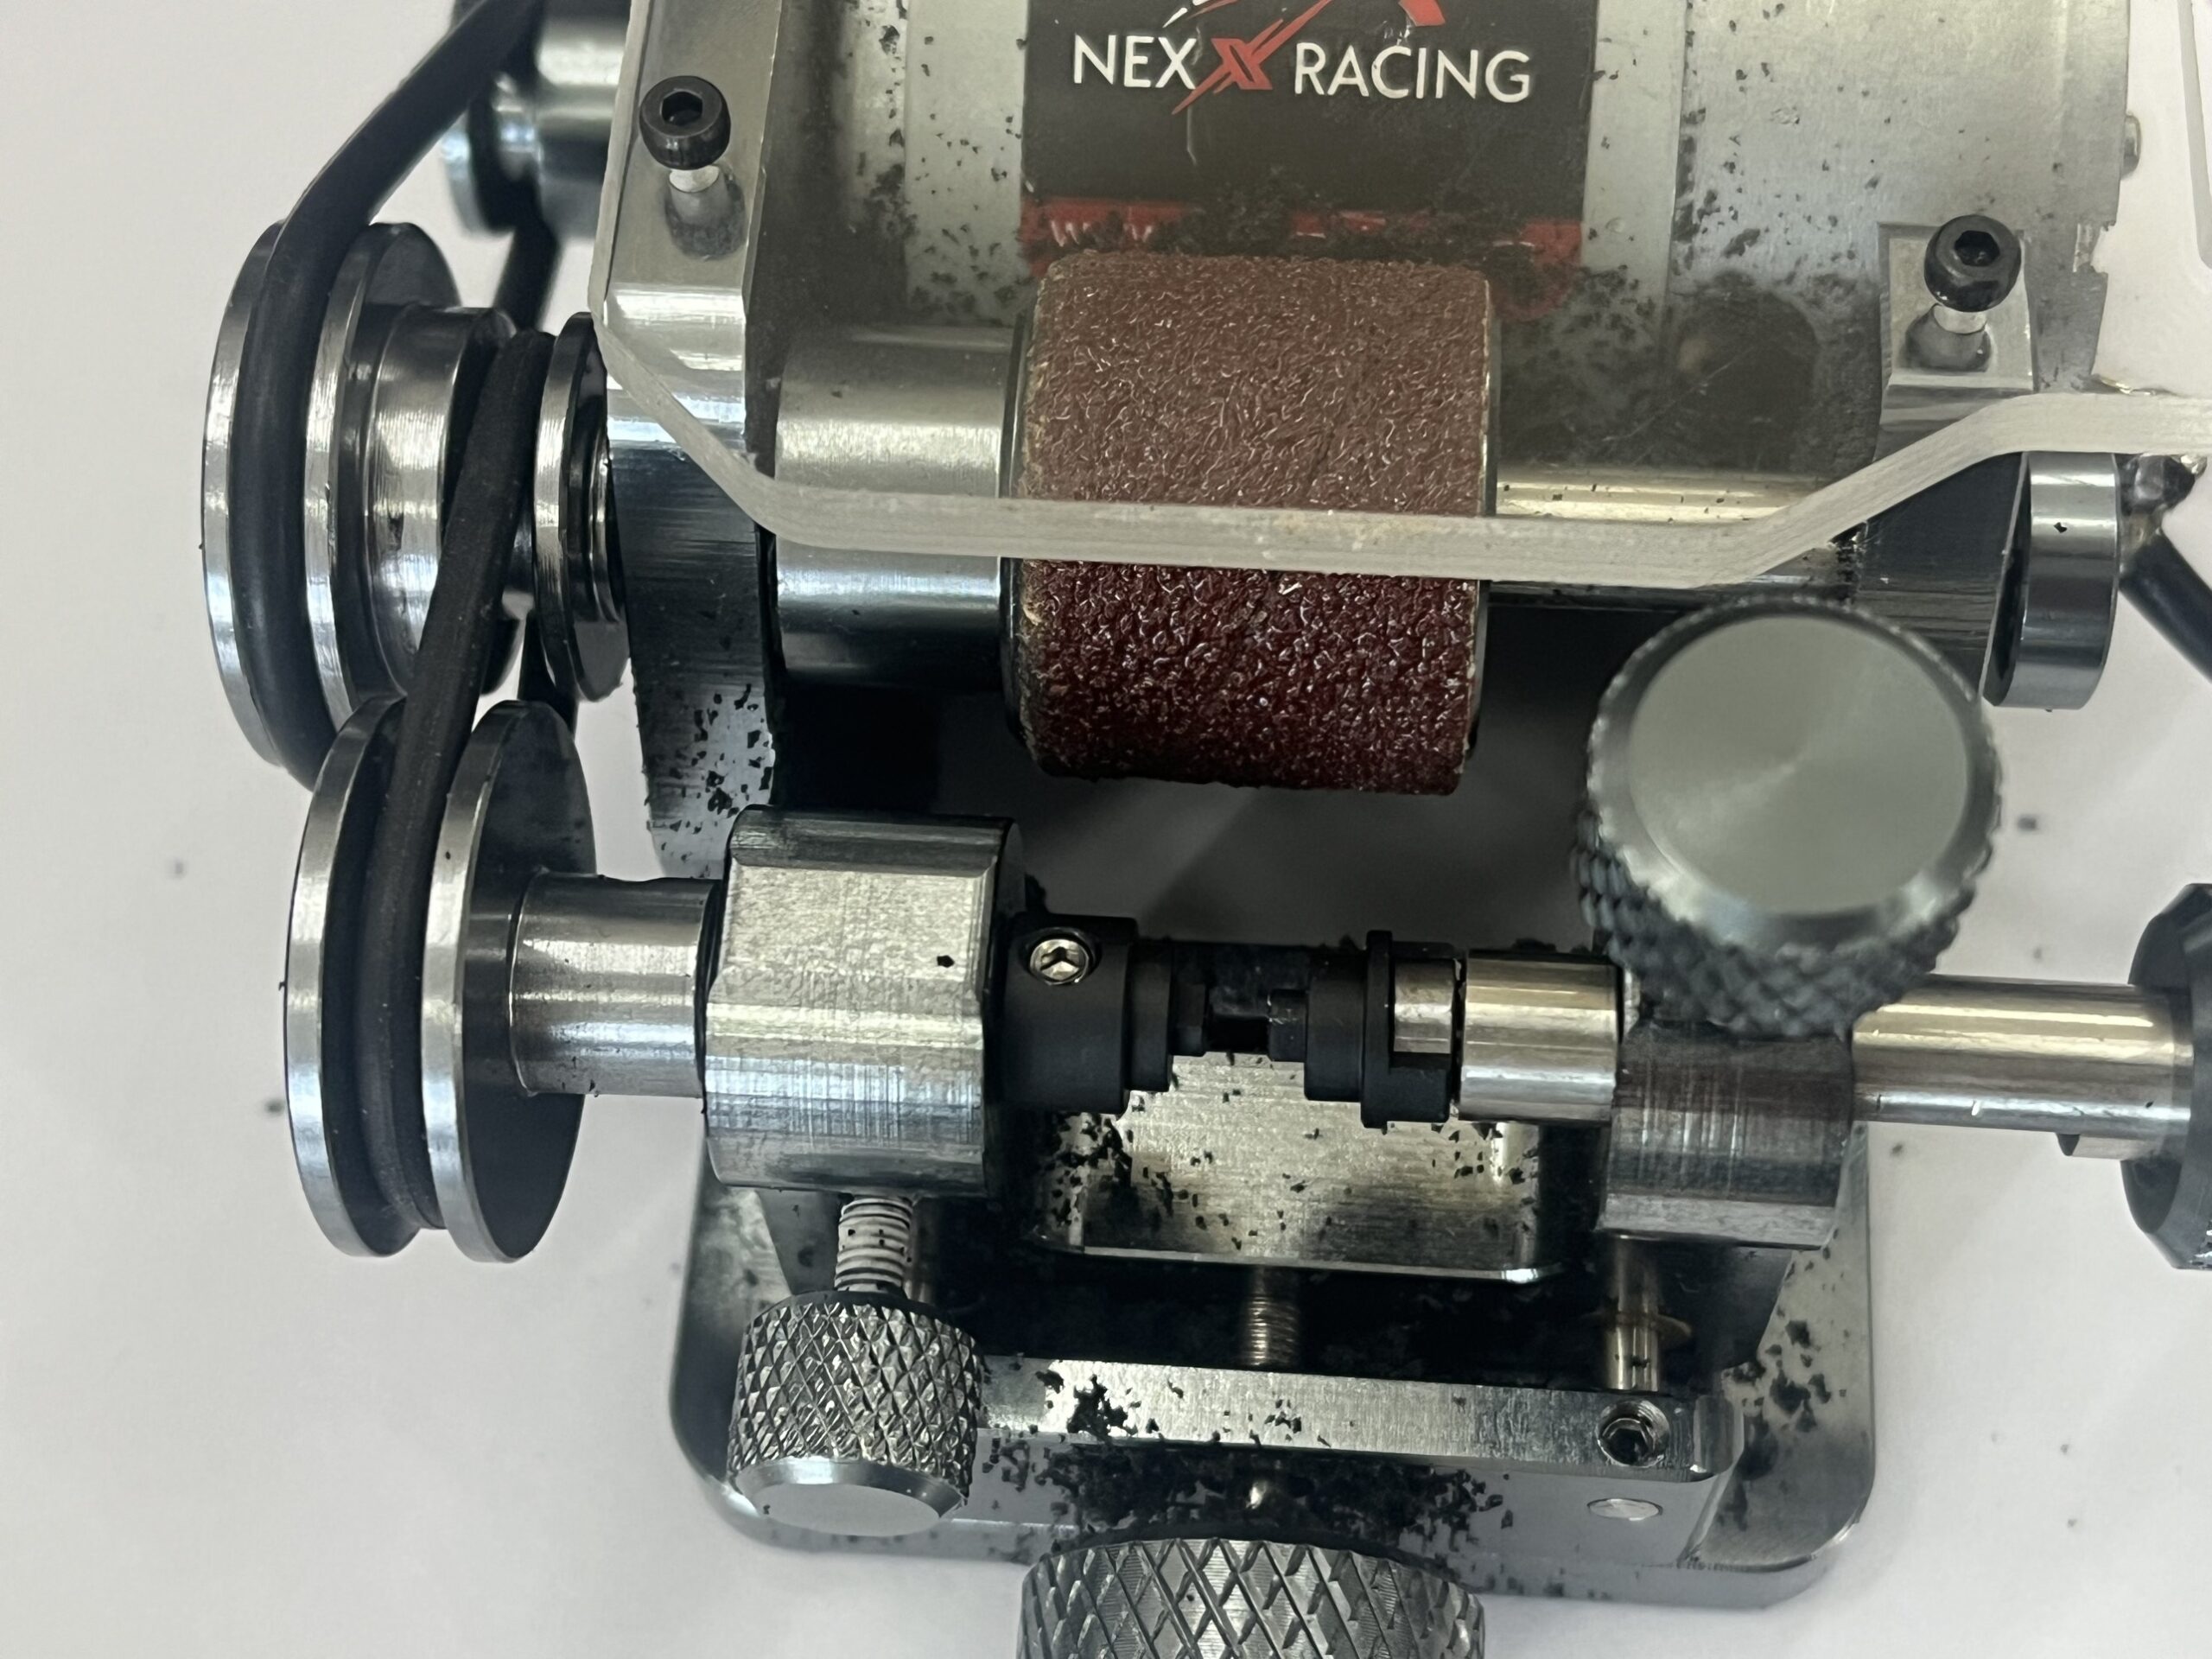 Nexx Racing Tire Truer Slot Wheel Adaptor for 2mm Wheel